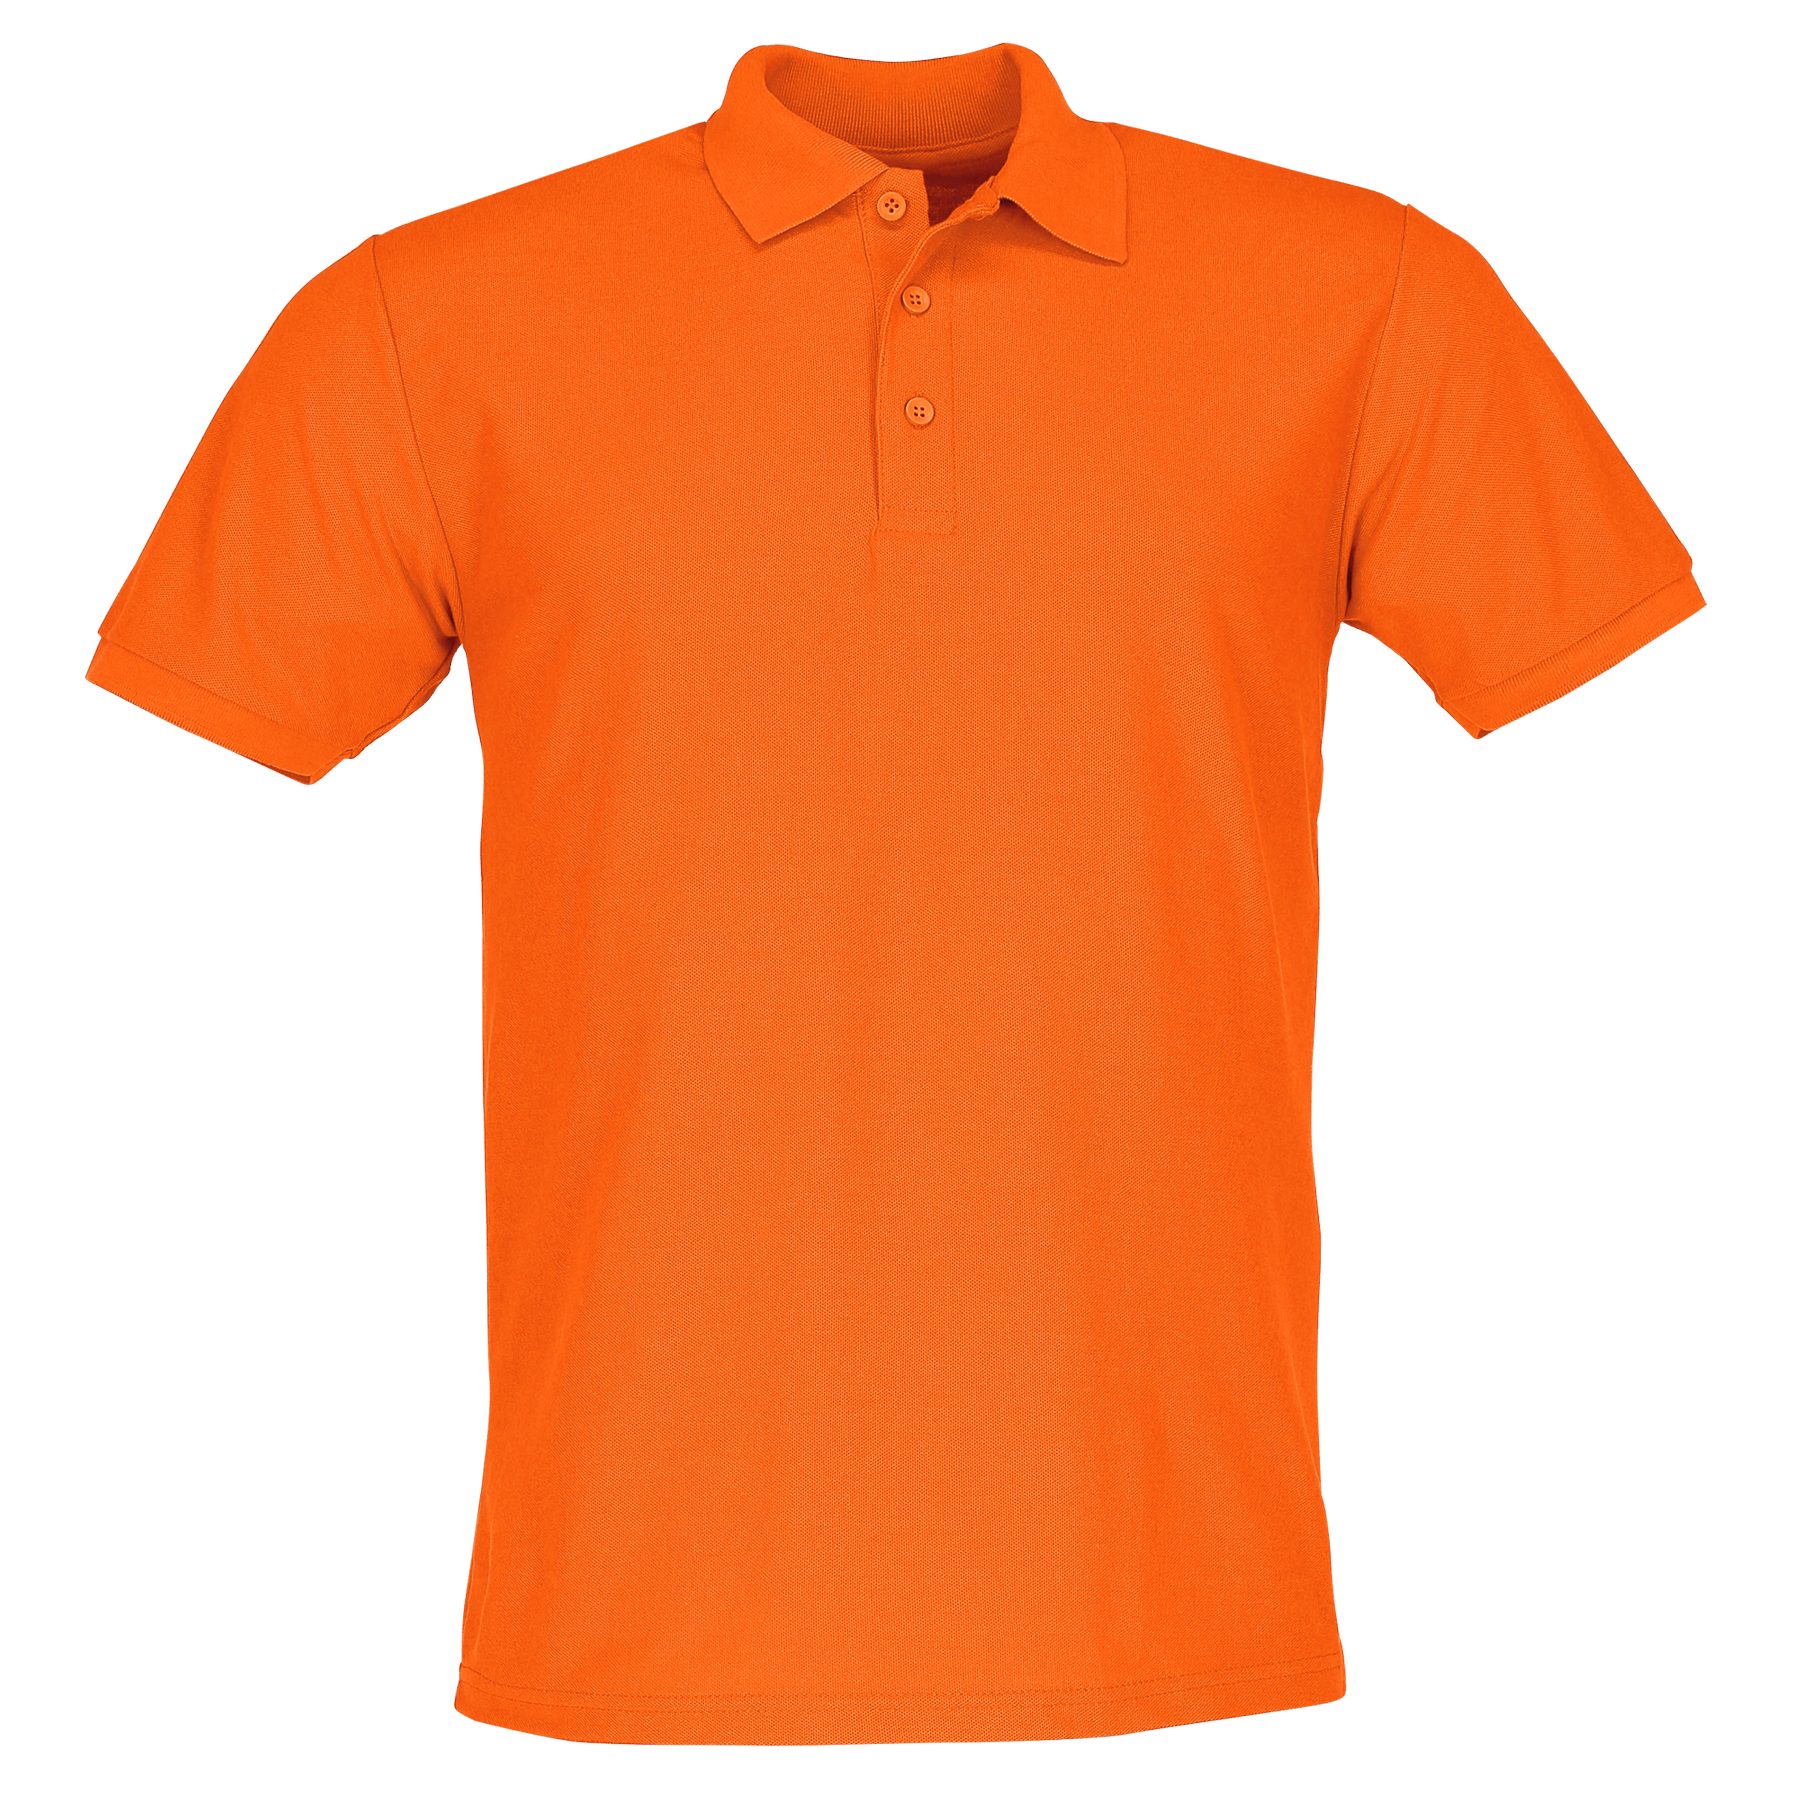 [Versand am selben Tag] Fruit of Loom + Poloshirt Polo 65/35 MyShirt the orange GRATIS Stoffbeutel